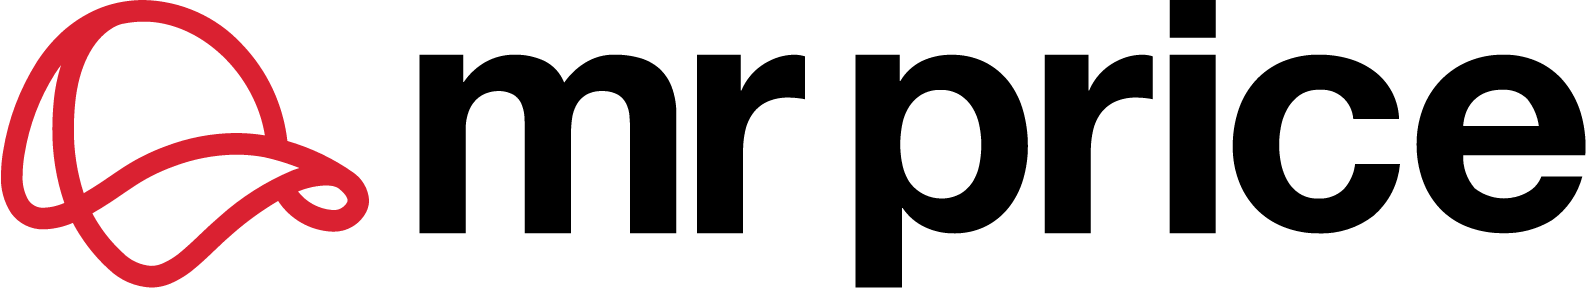 Mr Price Group logo large (transparent PNG)